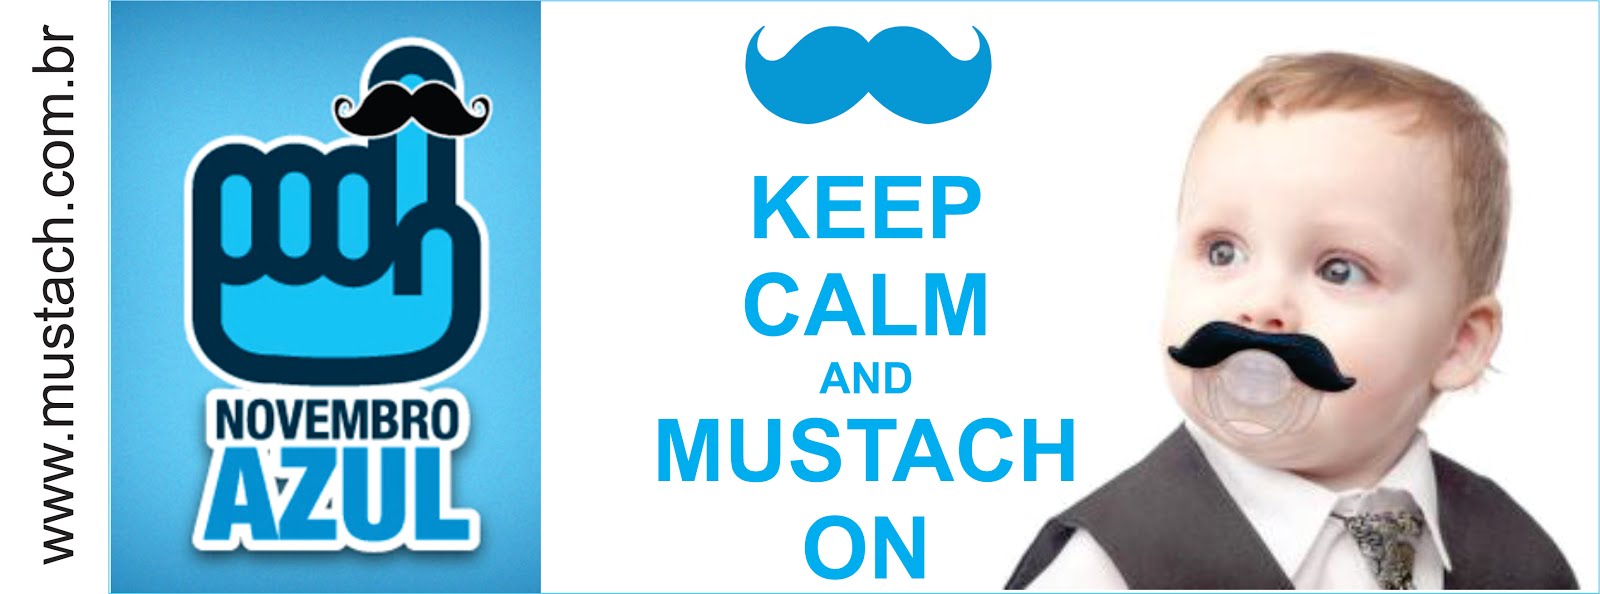 www,mustach.com.br